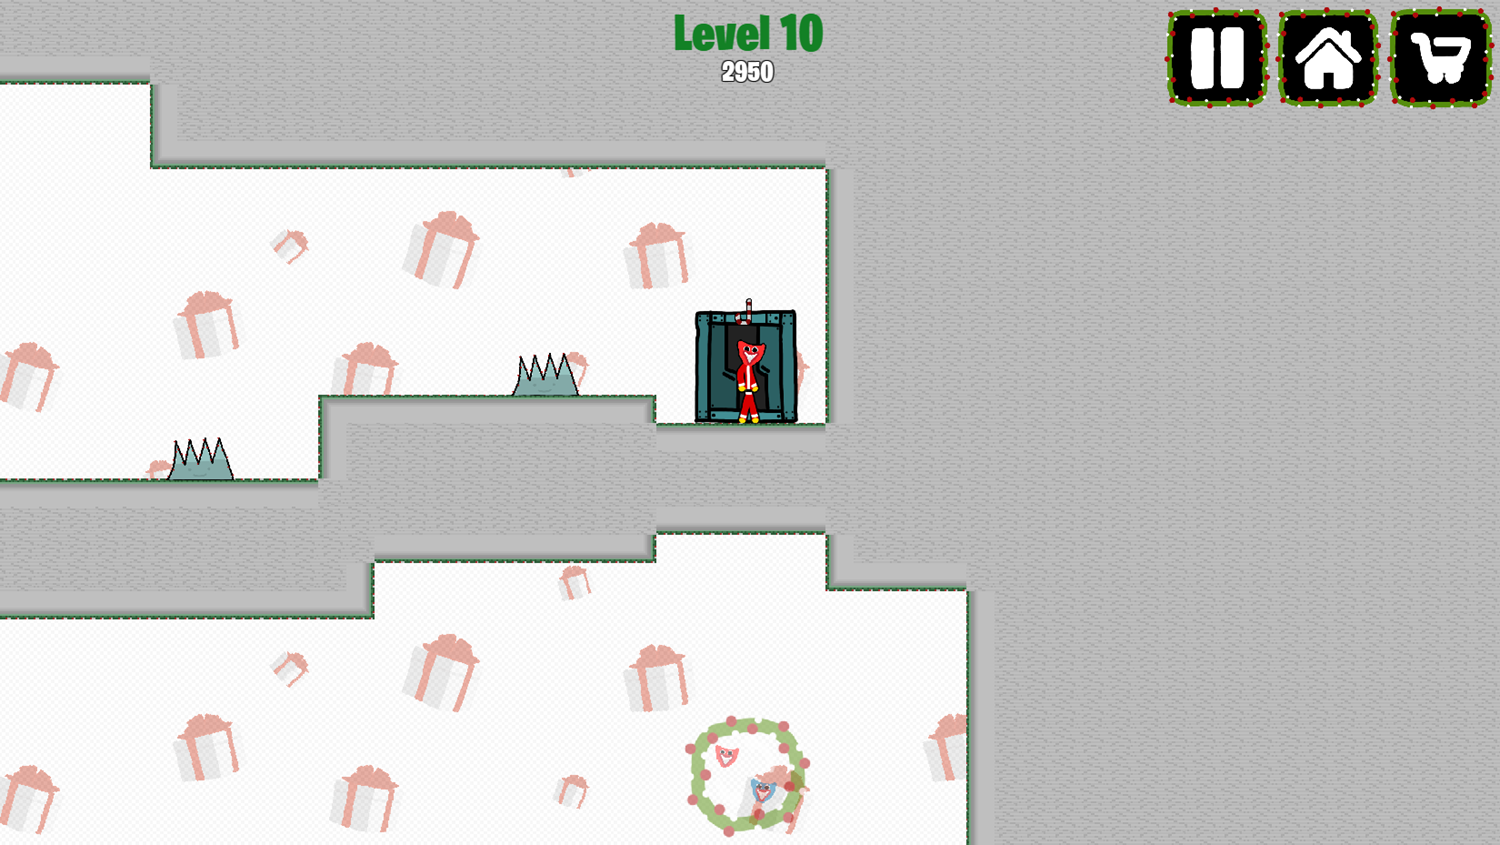 HuggyBros Christmas Game Final Level Complete Screenshot.